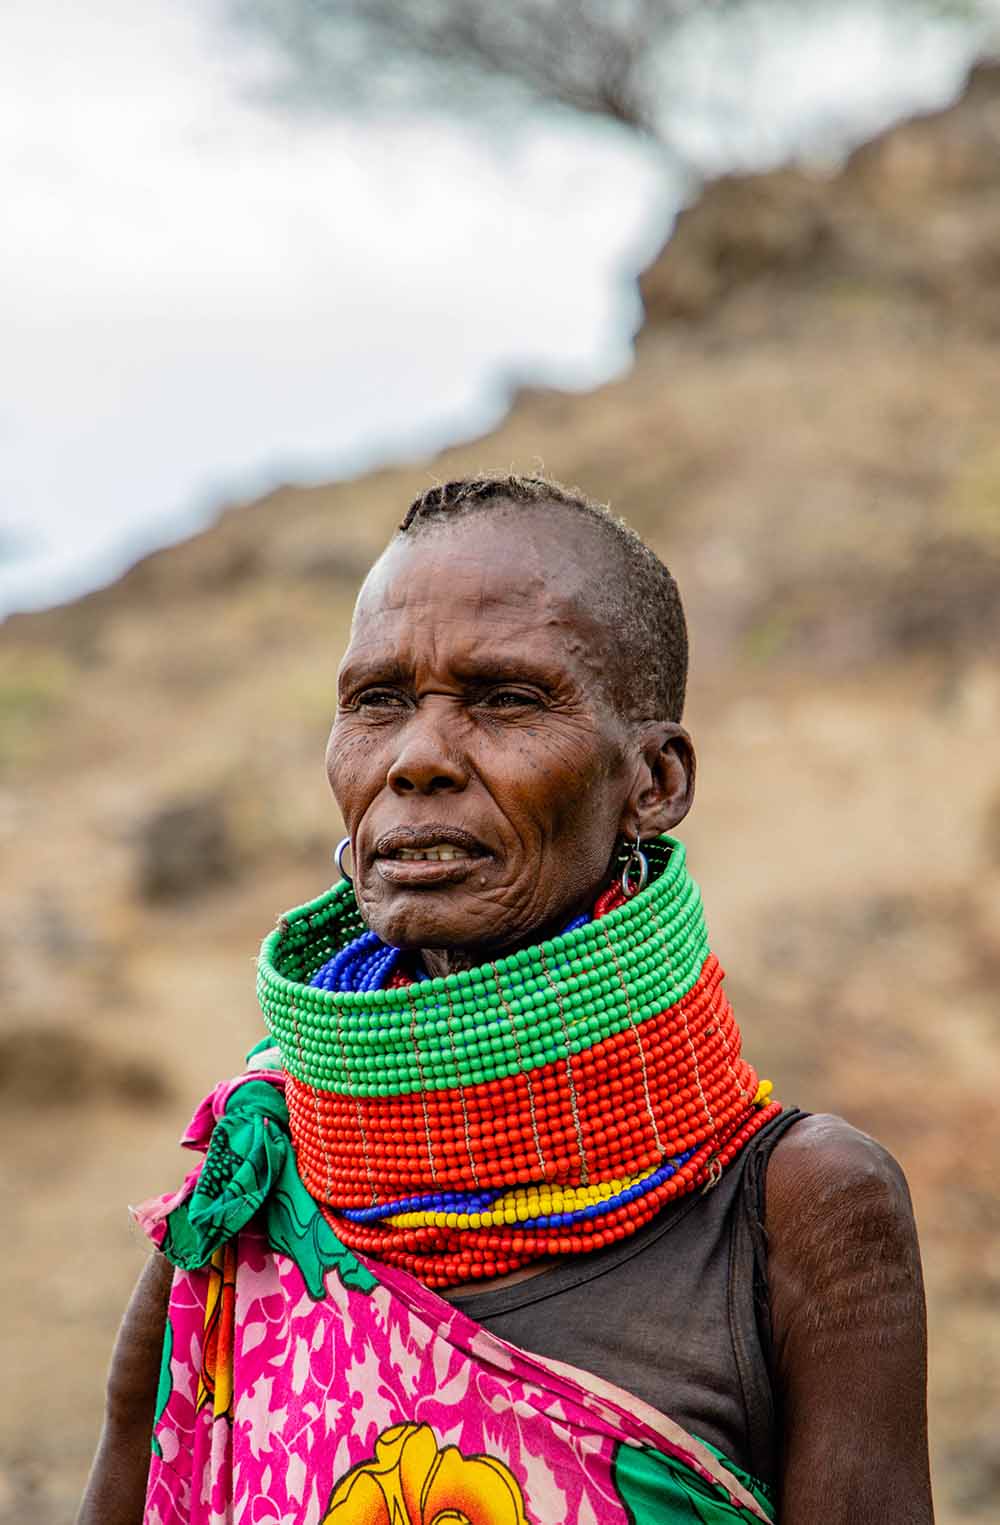 Portrayal of a lady from the Turkana community